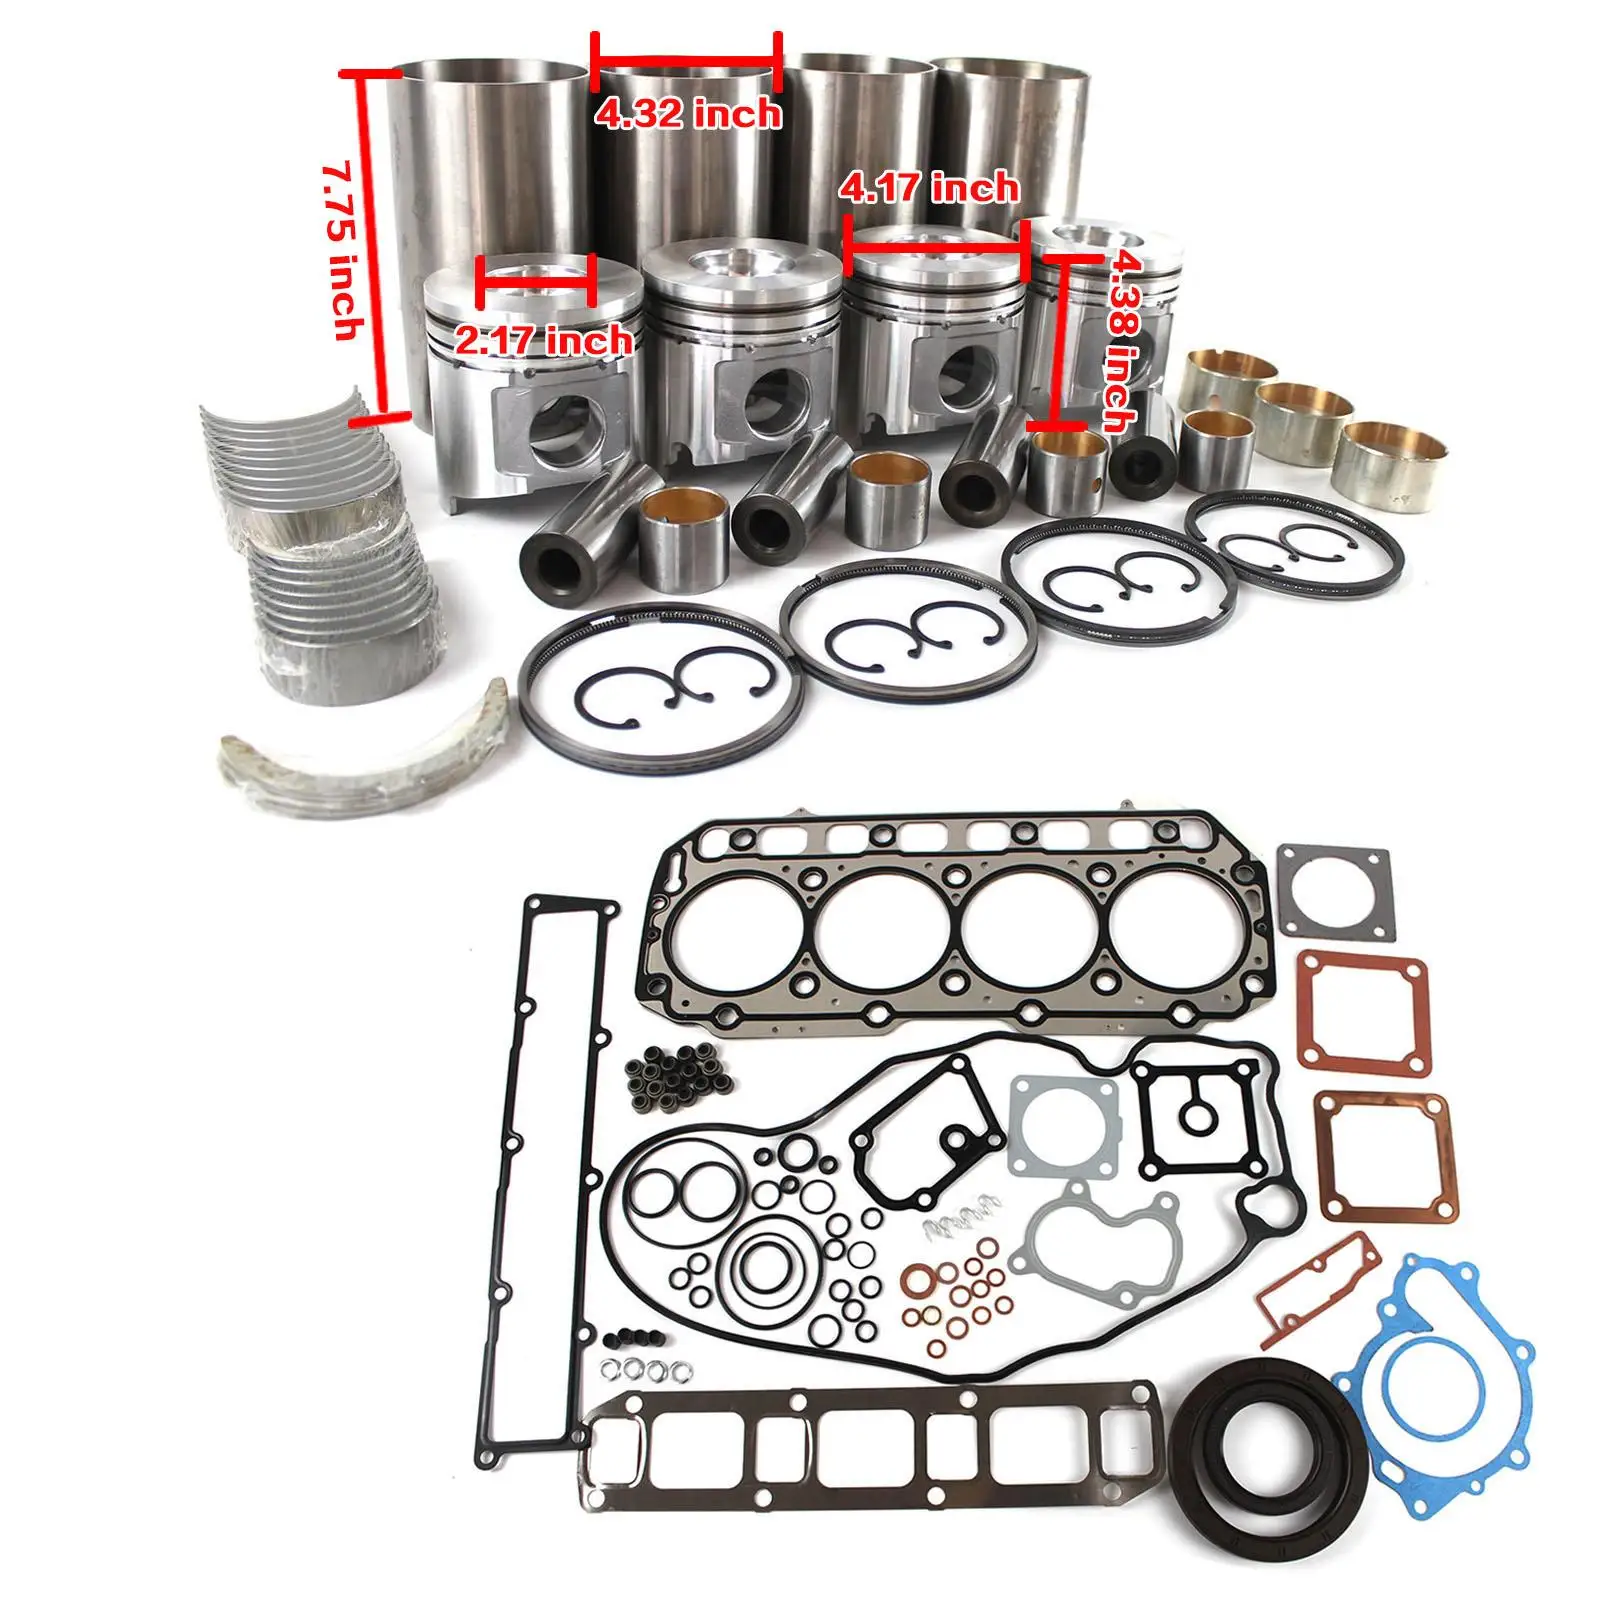 

Piston Overhaul Rebuild Kit For Yanmar 4TNV106 Engine Takeuchi TL150 Mustang MTL25 Gehl CTL80 Loaders